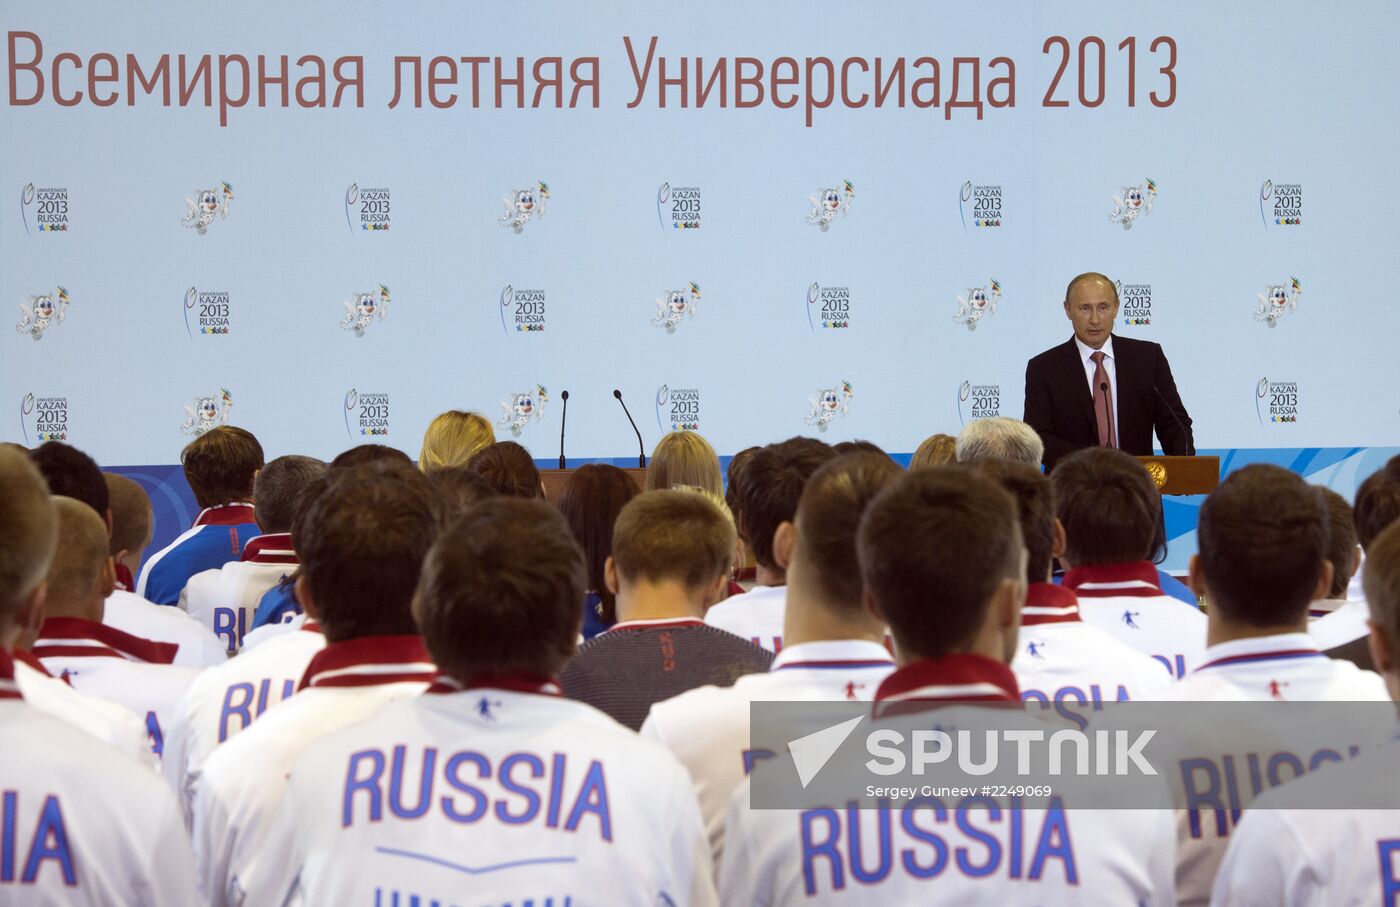 Vladimir Putin meets with medalists of 27th Universiade in Kazan